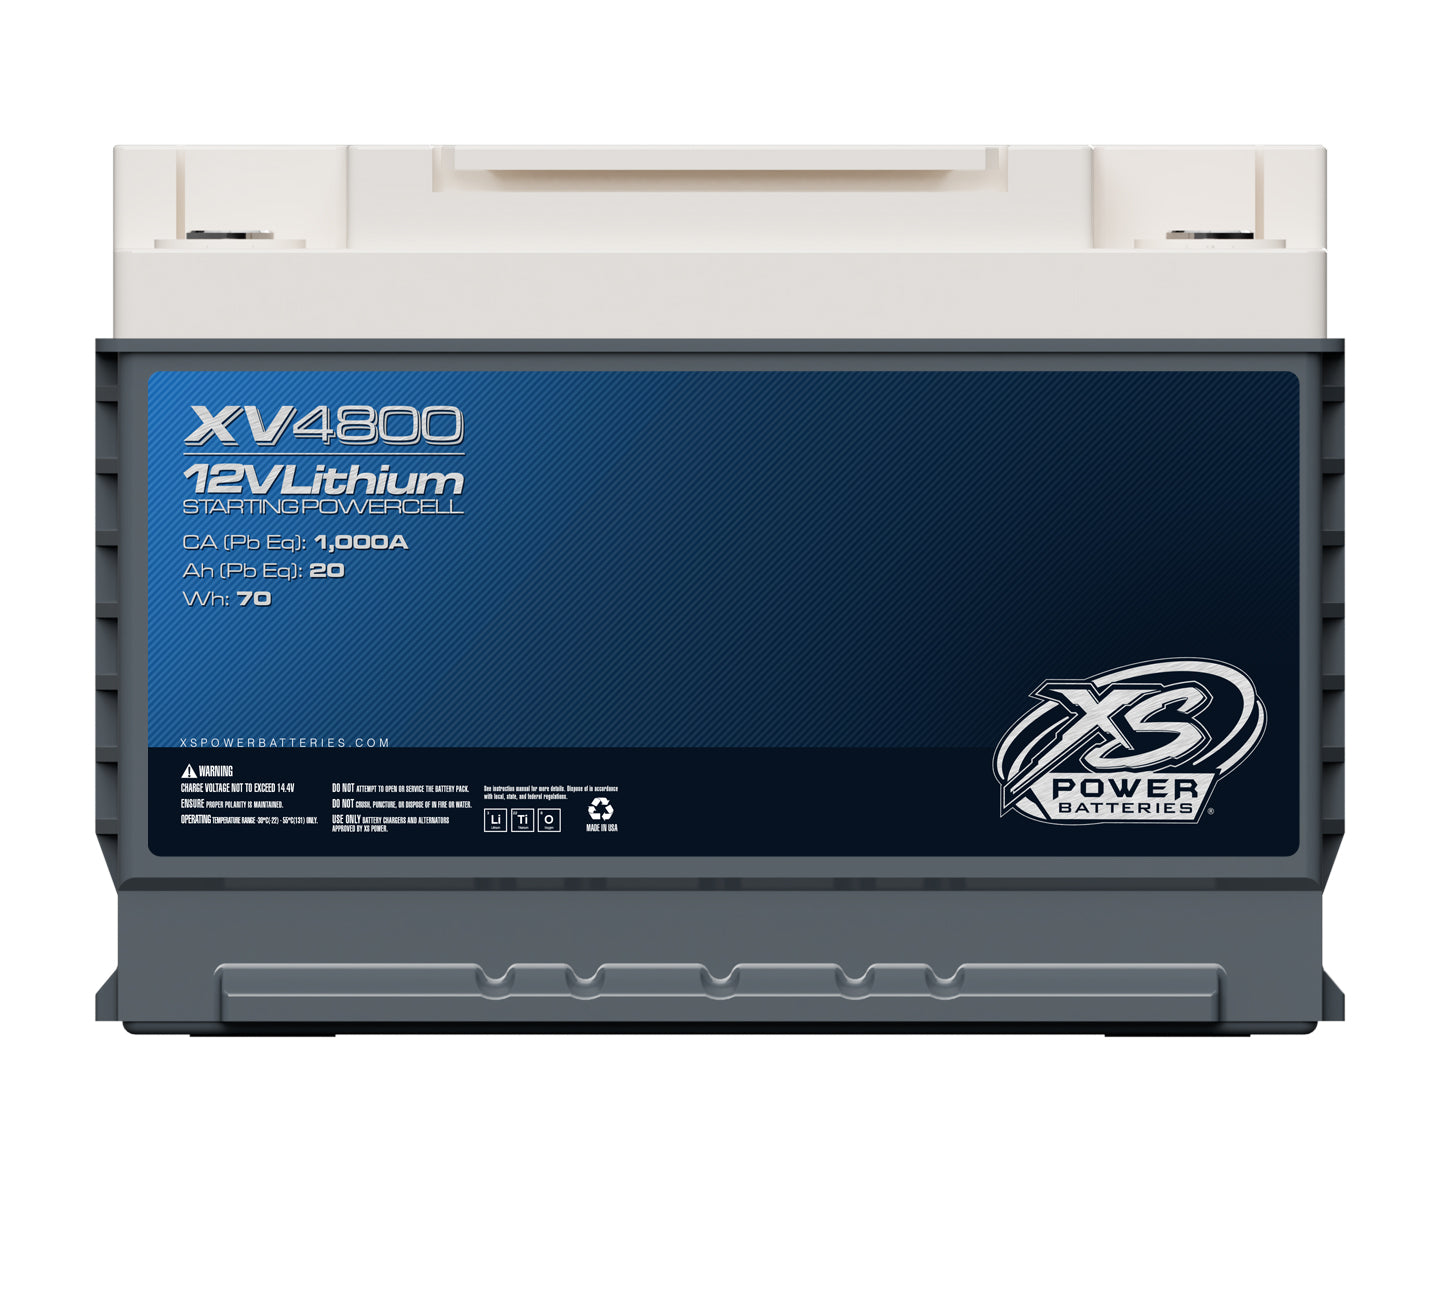 XV4800 XS Power 12VDC Group 48 Lithium LTO Underhood-Safe Vehicle Battery 1500W 70Wh